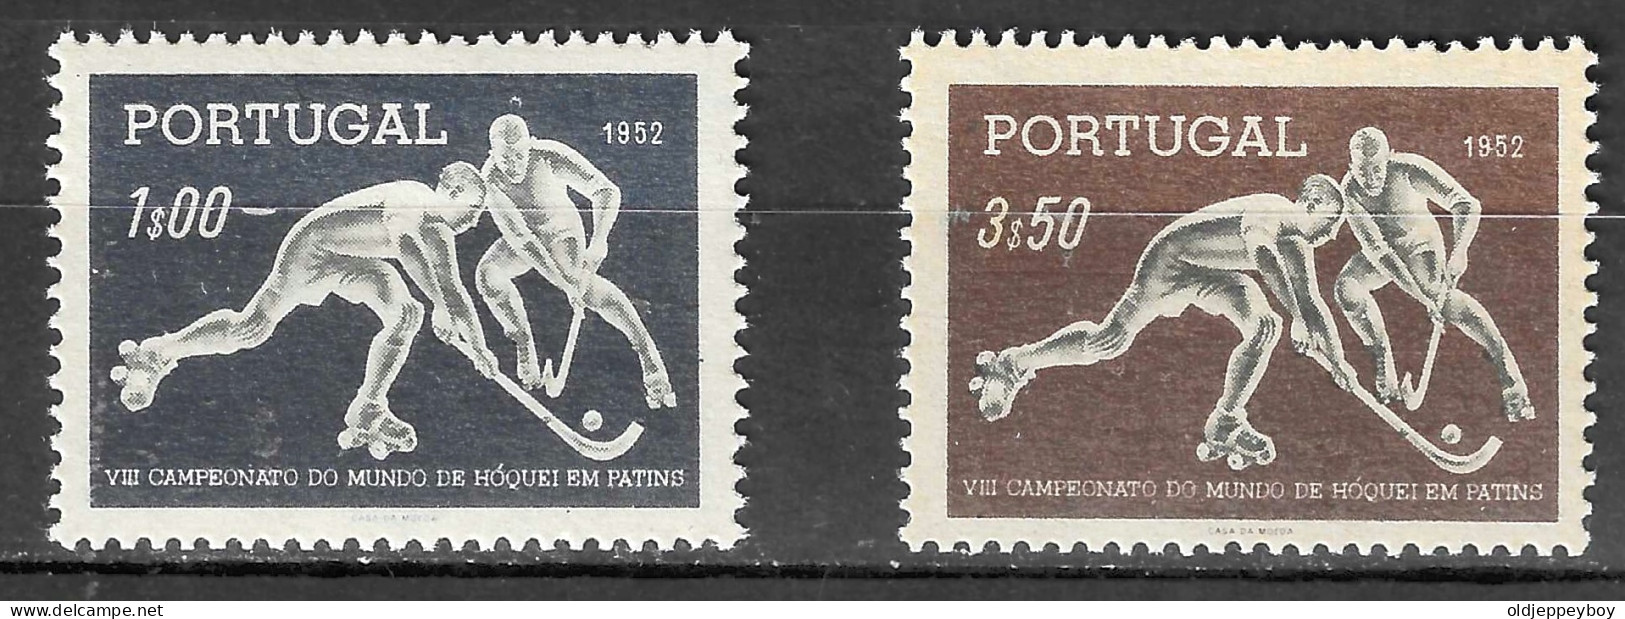 Portugal 1952 AF#751-752** Hockey On Roller Complete Set Sports MNH (3.50 STAMP WITH GUM DISTURBANCE) - Ongebruikt